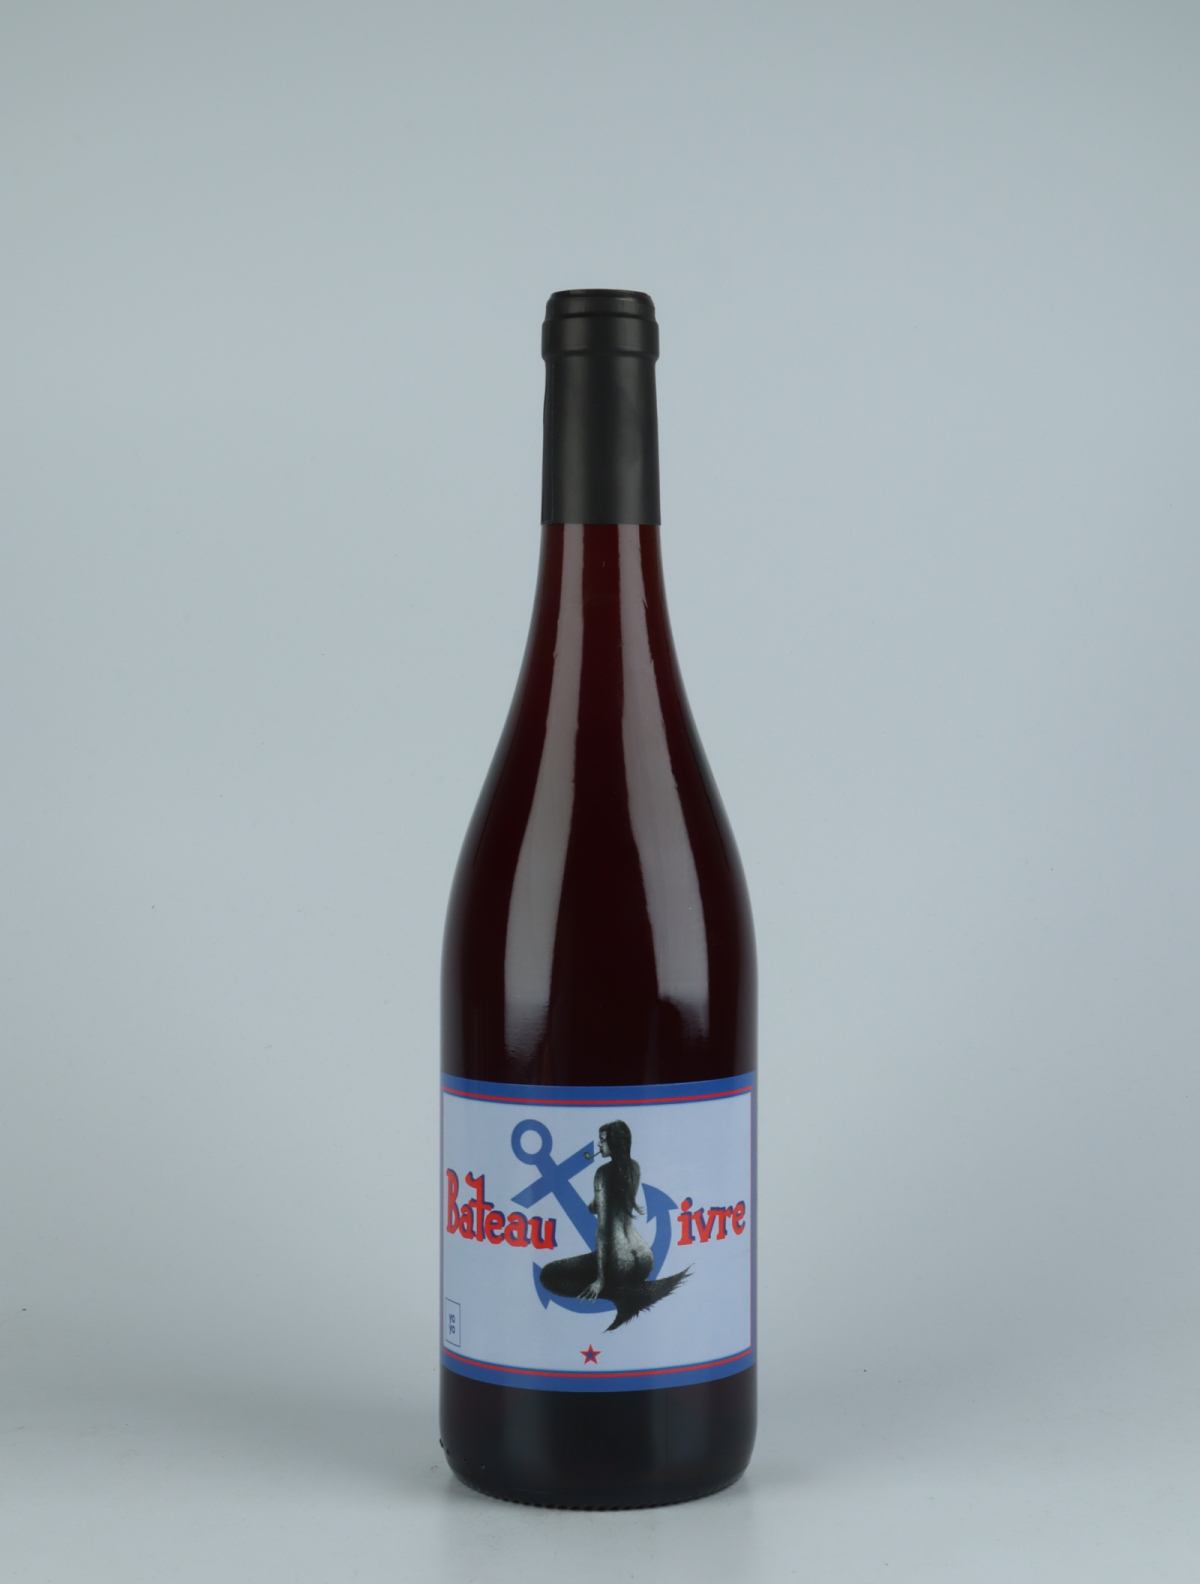 A bottle 2021 Bateau Ivre Primeur Red wine from Domaine Yoyo, Rousillon in France